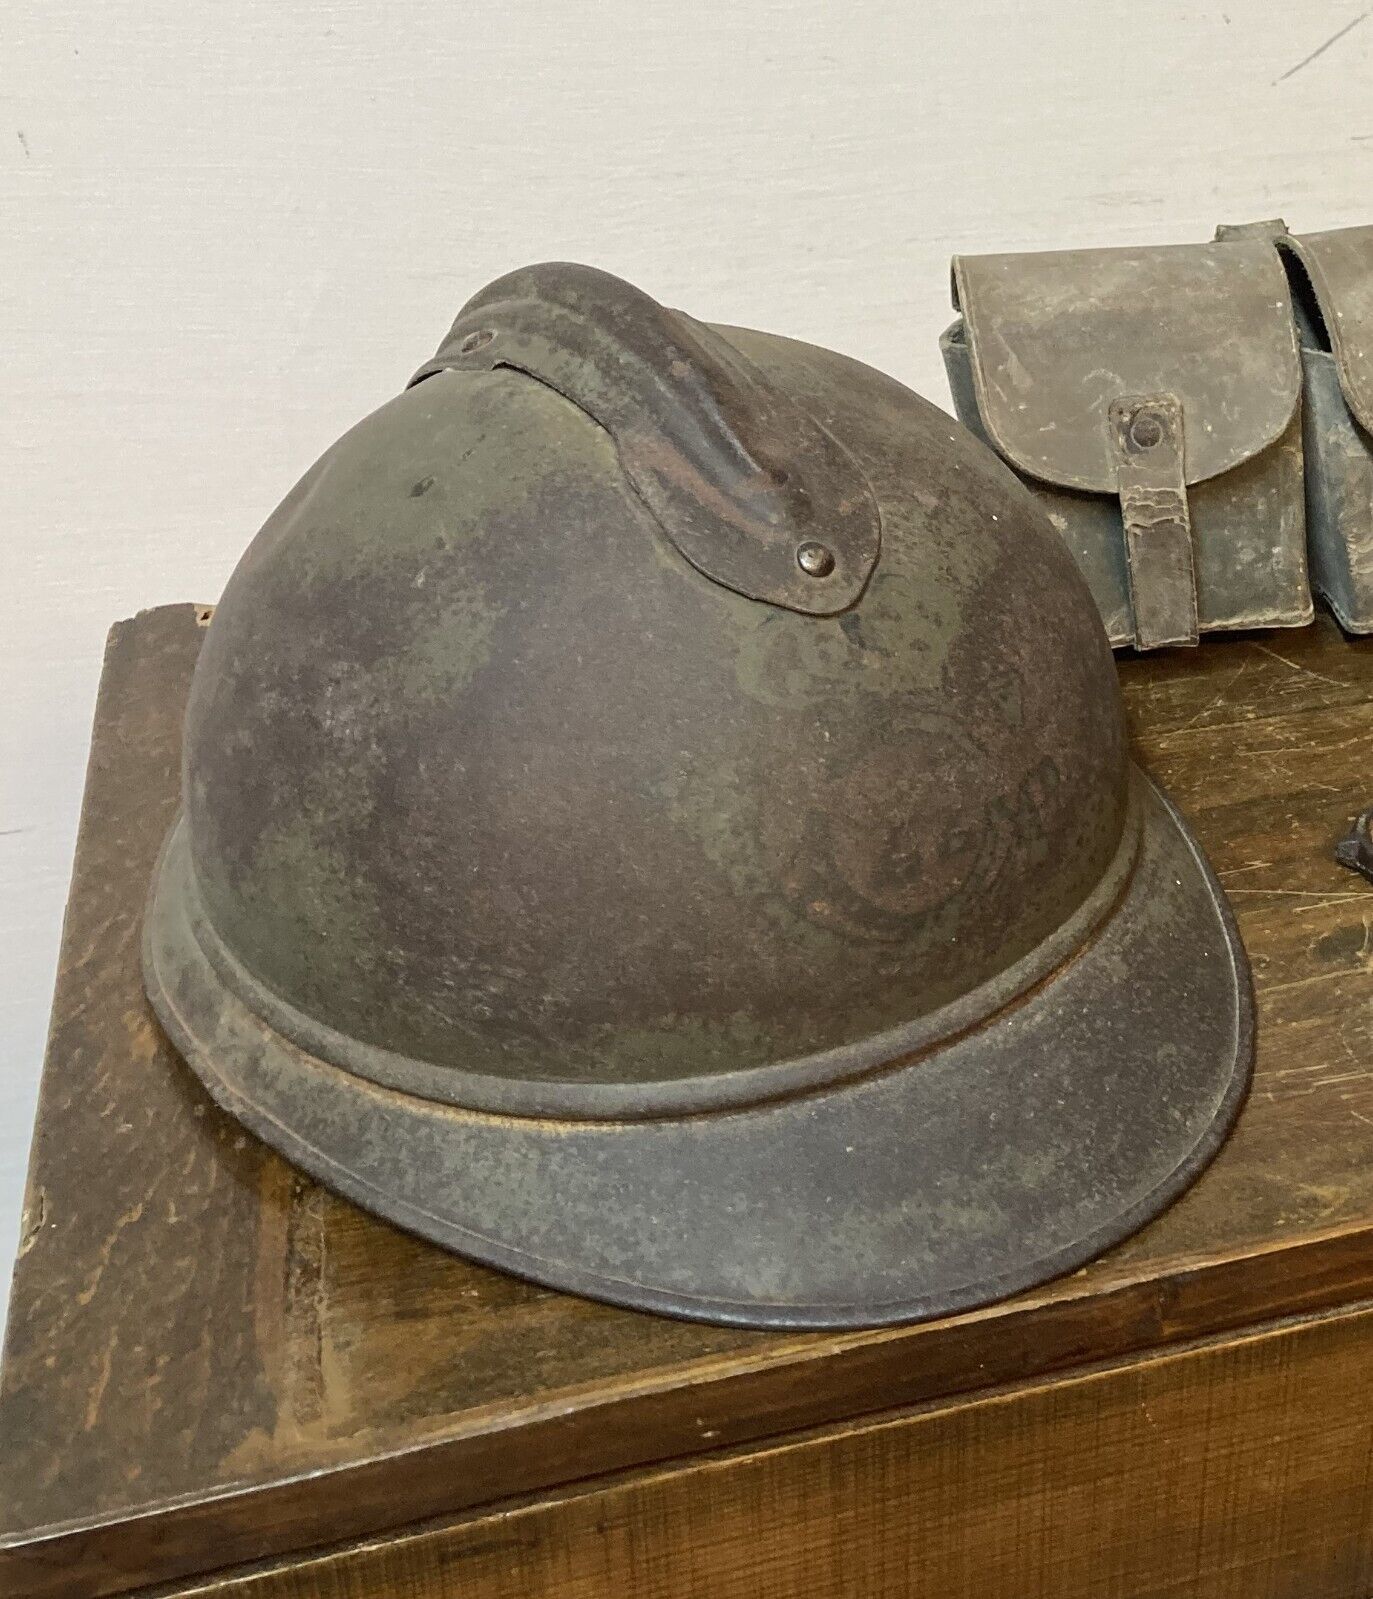 WW1 Italian Adrian Helmet shell - Unit signed (22° Cavalry Rgt) and named - rare